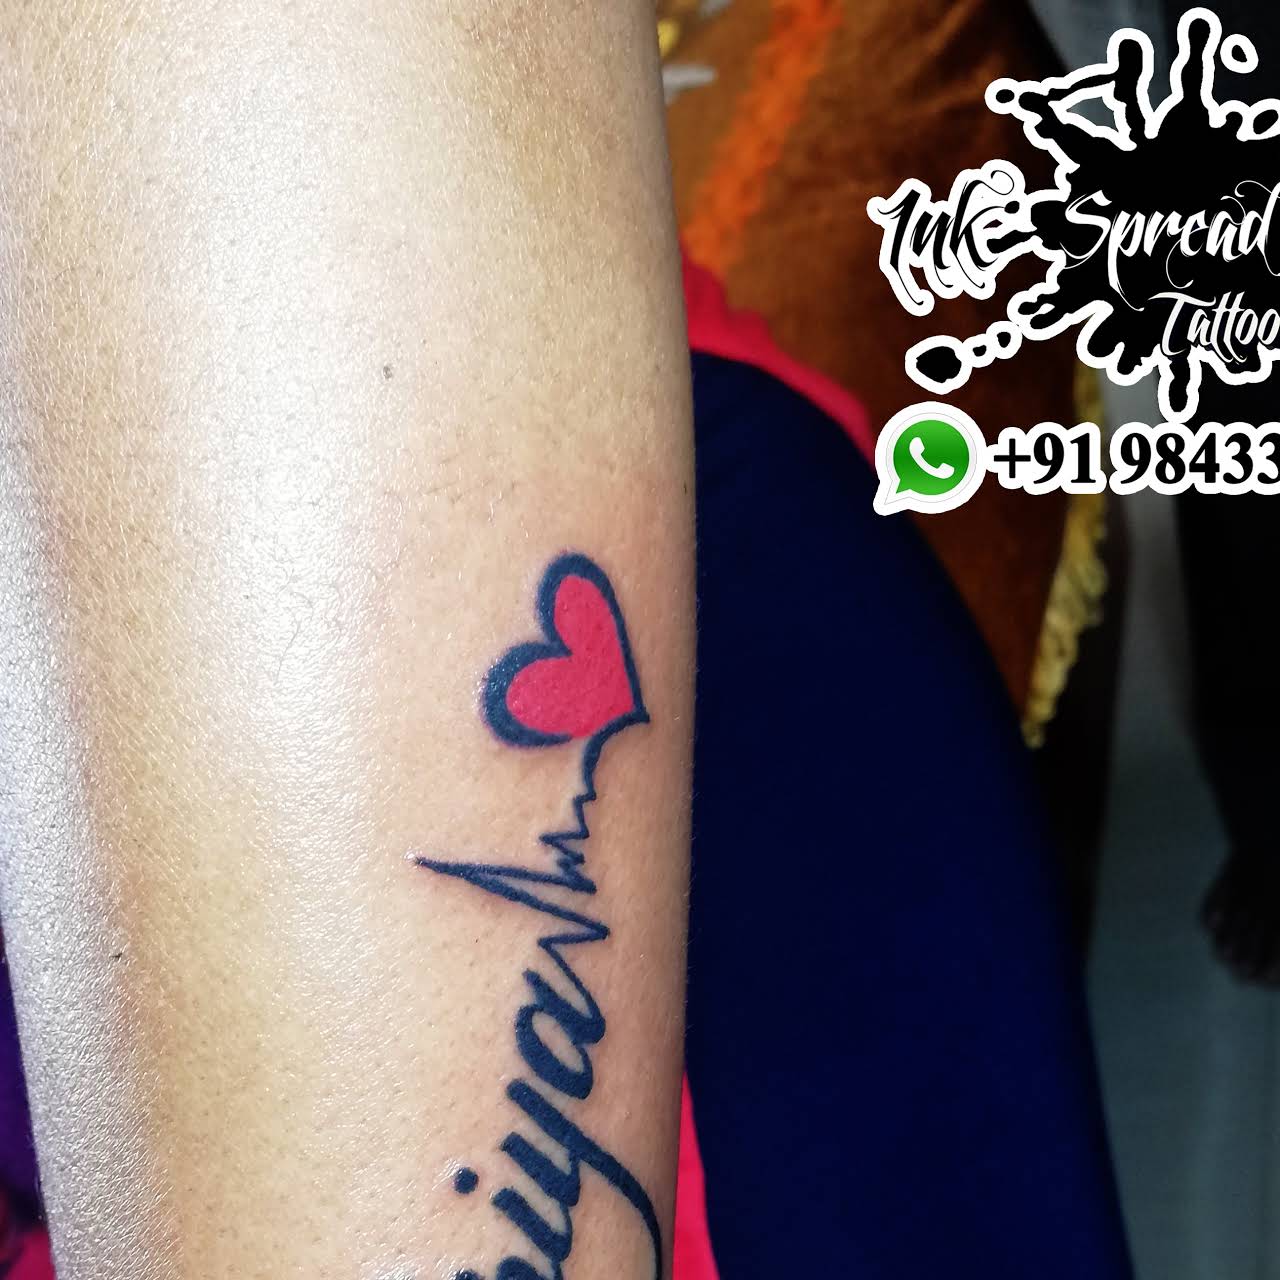 Manju Name Tattoo Images Manju Name Tattoo Images Vishal Name Tattoo Designs 1280x1280 Wallpaper Teahub Io